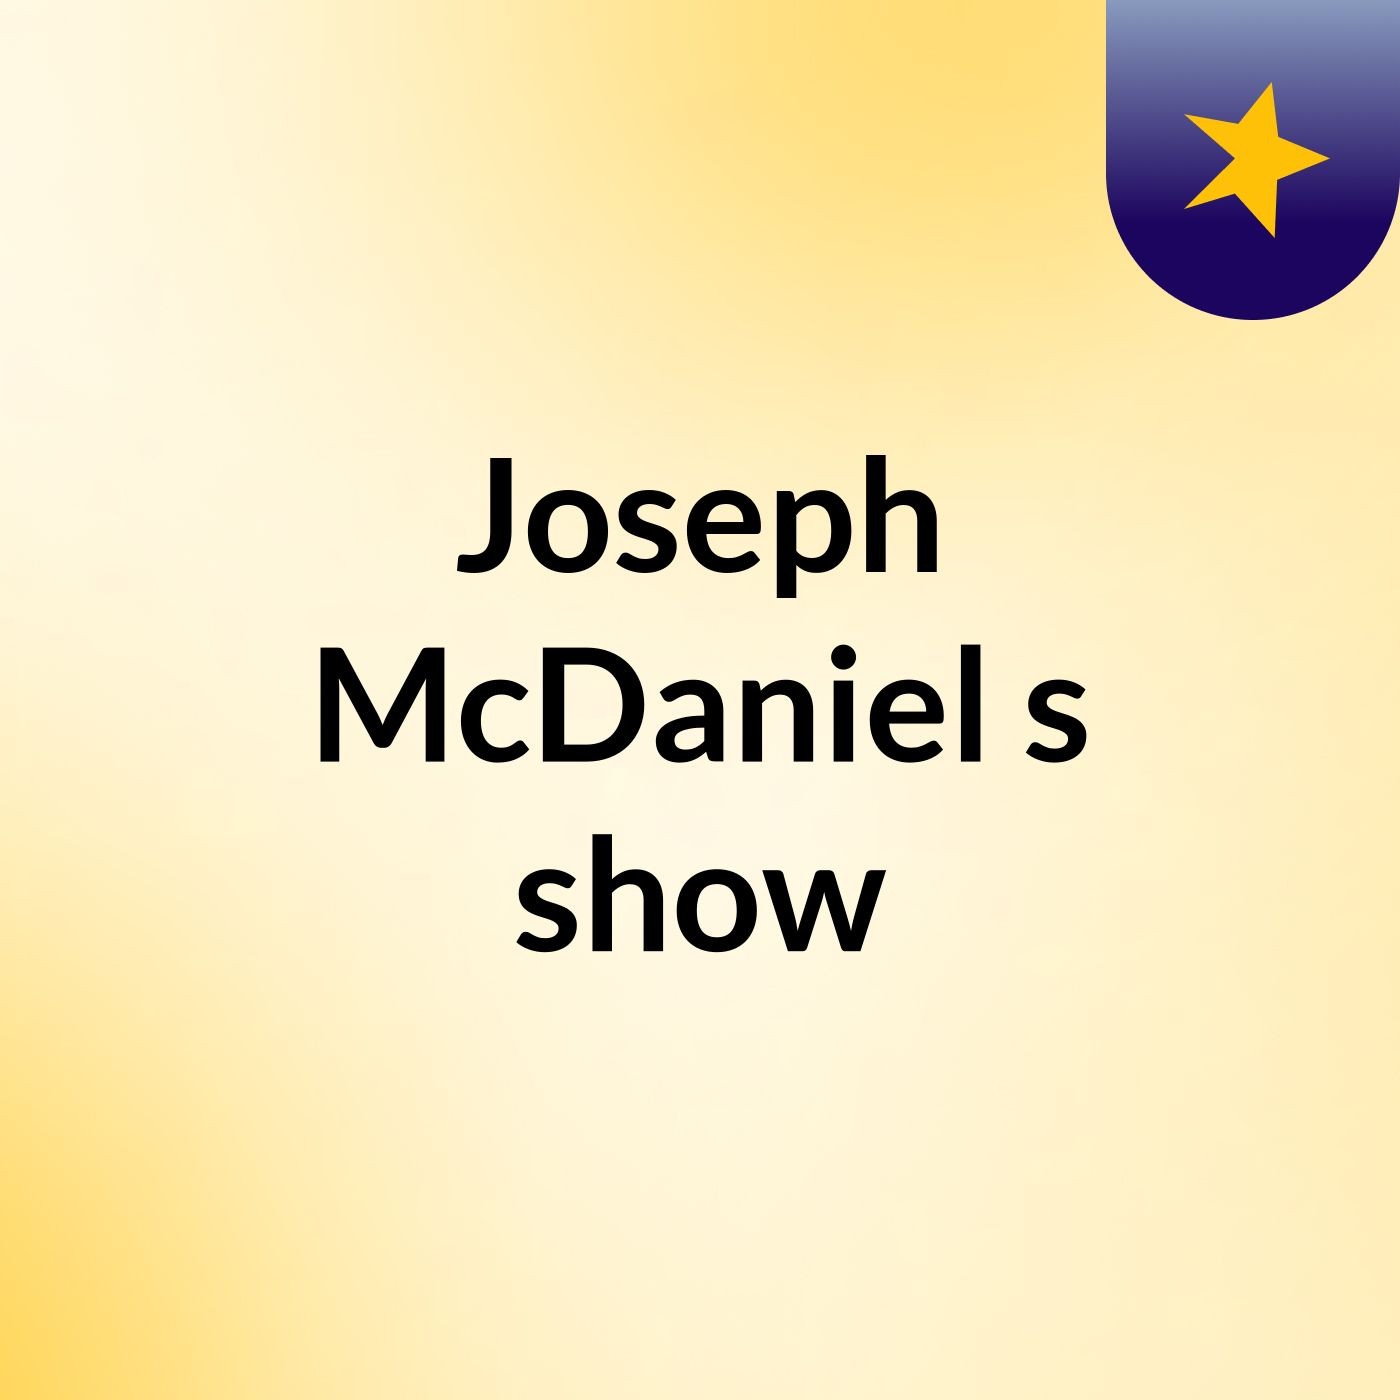 Joseph McDaniel's show